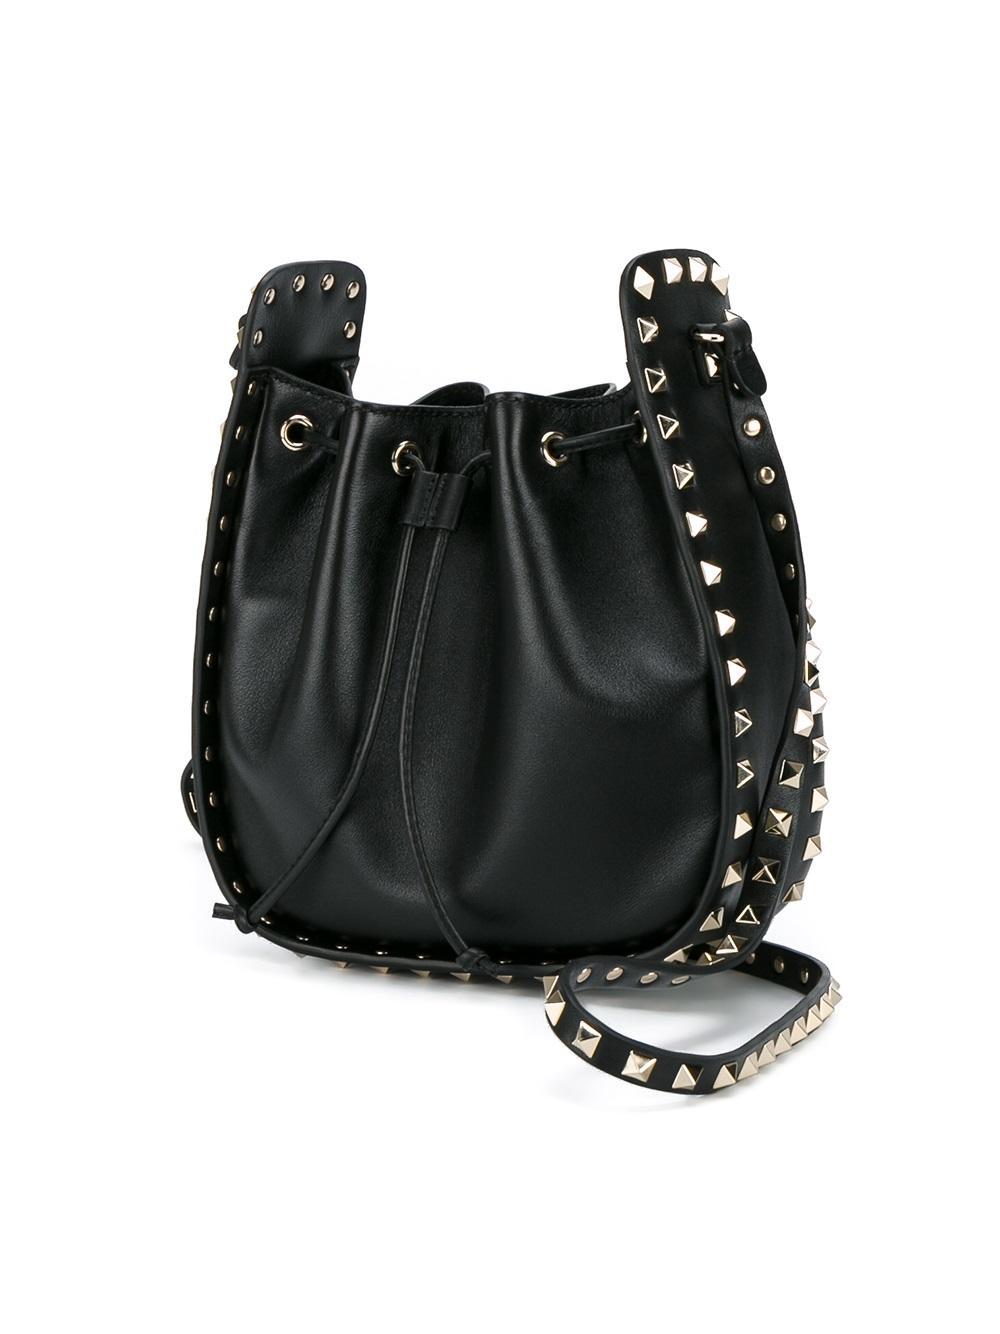 Lyst - Valentino Small Rockstud Leather Bucket Bag in Black